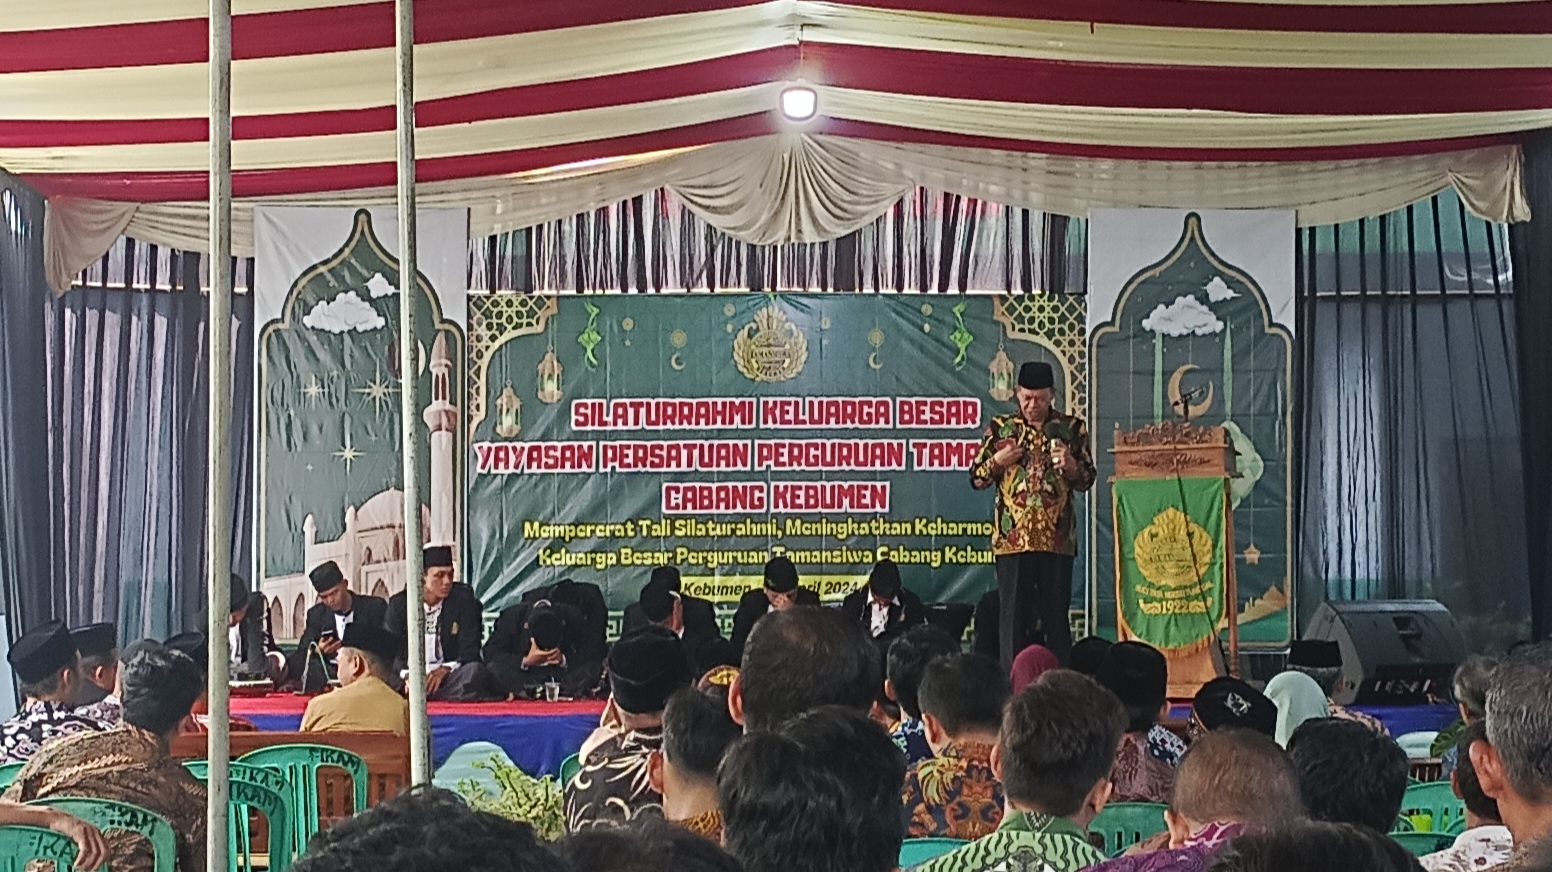 Silaturahmi Keluarga Besar Yayasan Persatuan Perguruan TamanSiswa Cabang Kebumen